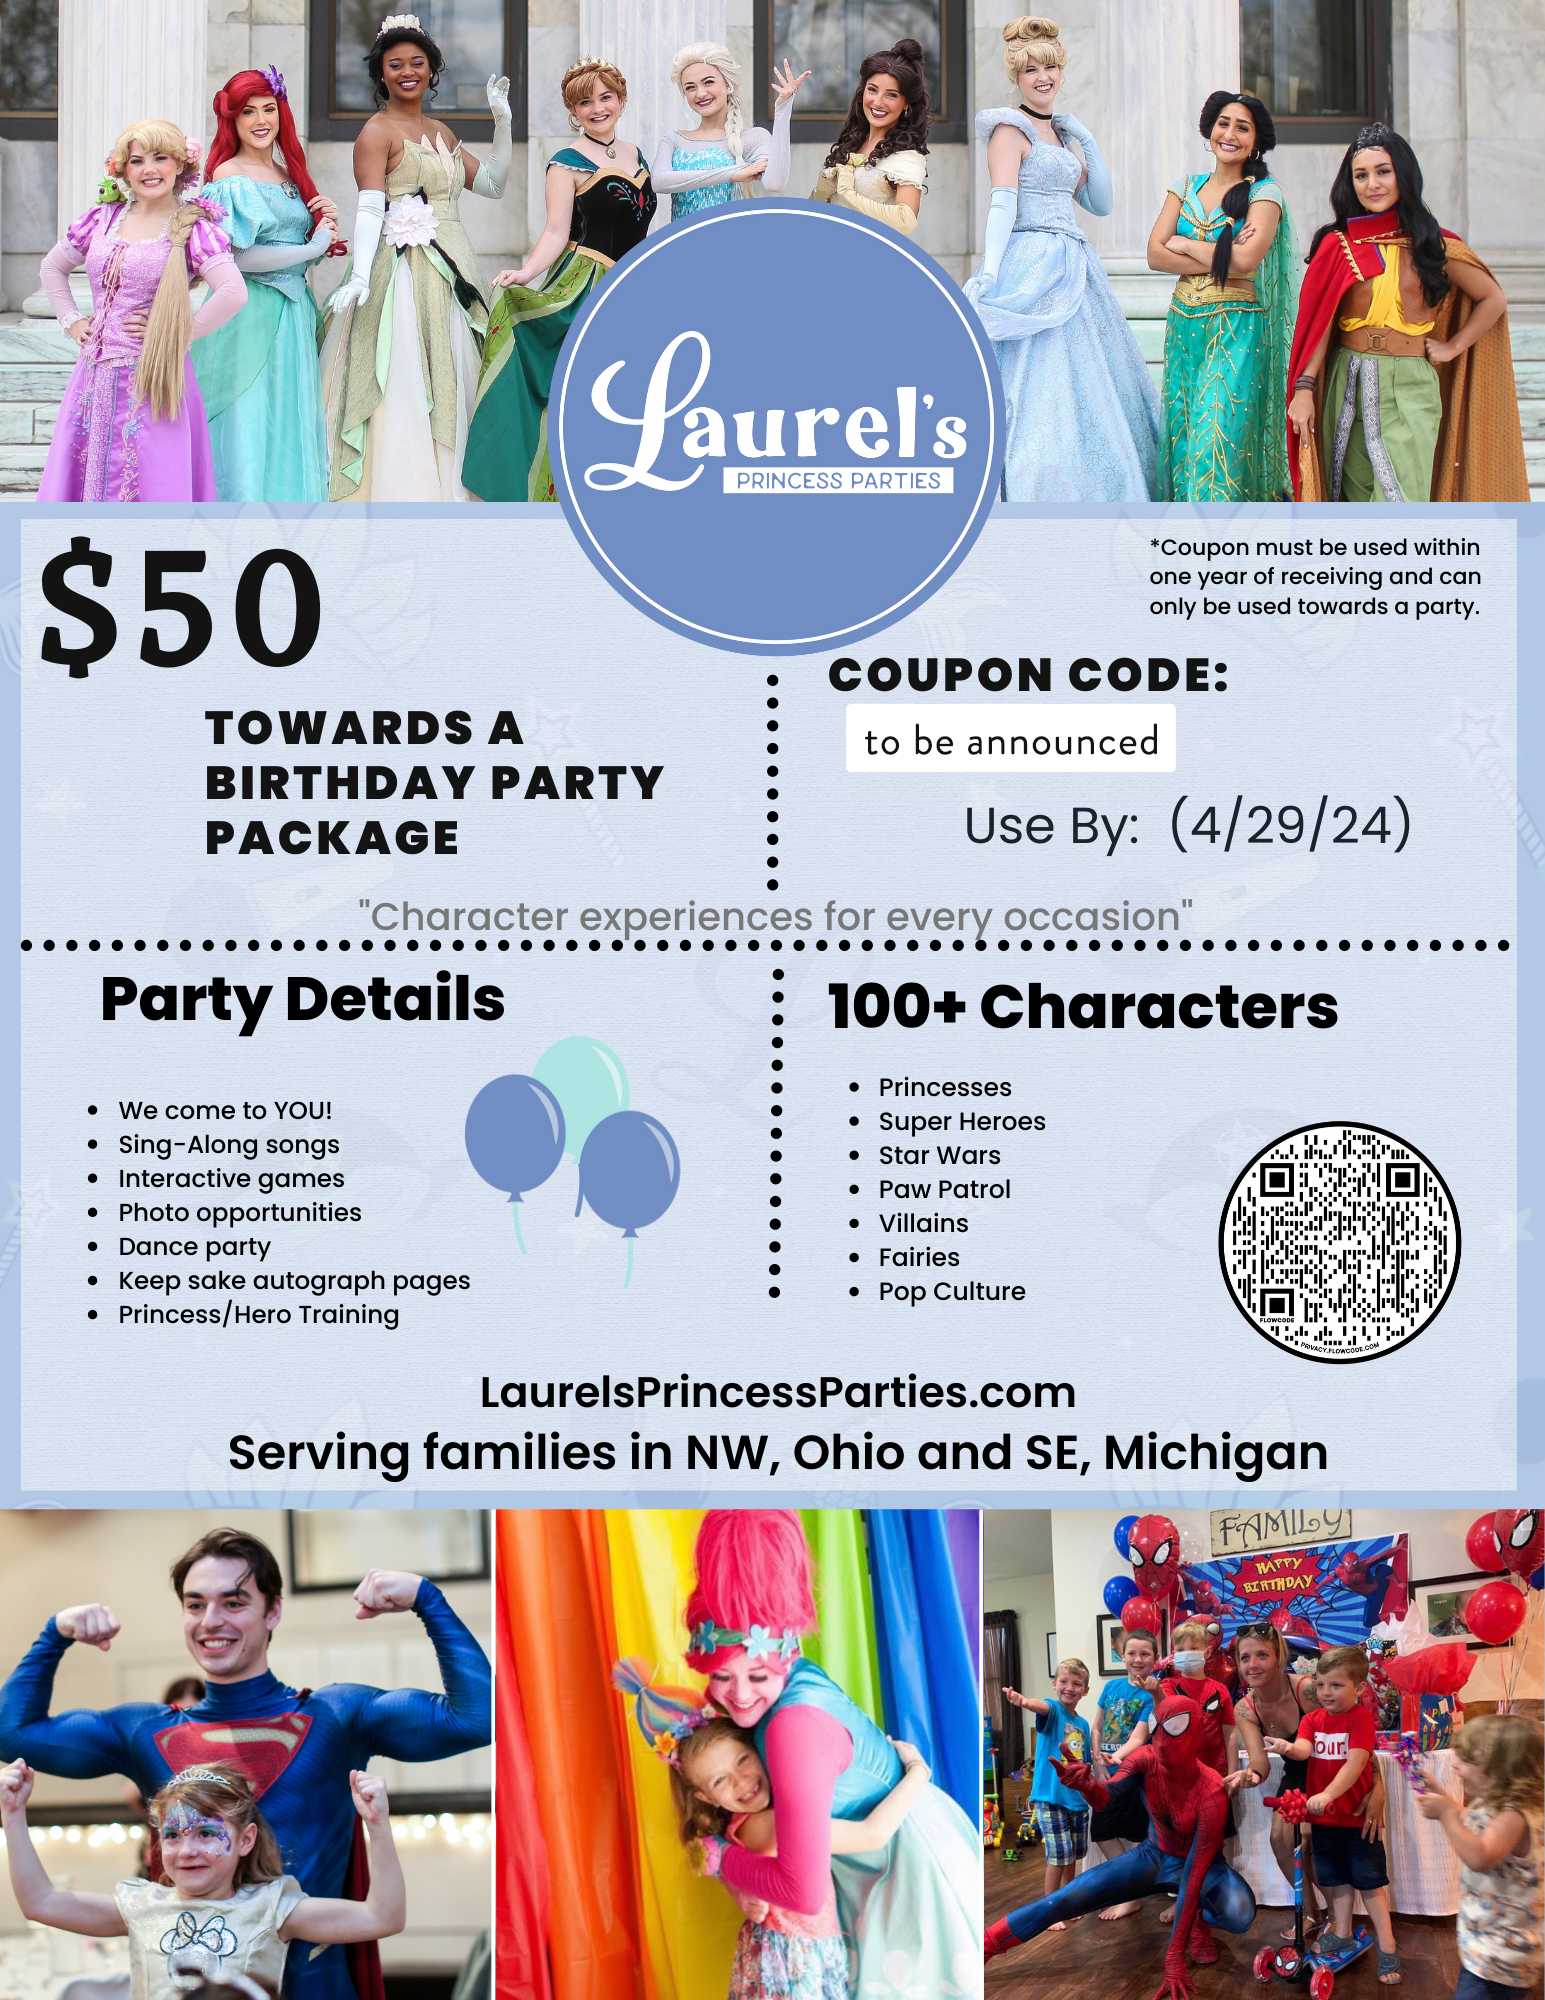 Laurel's Princess Parties